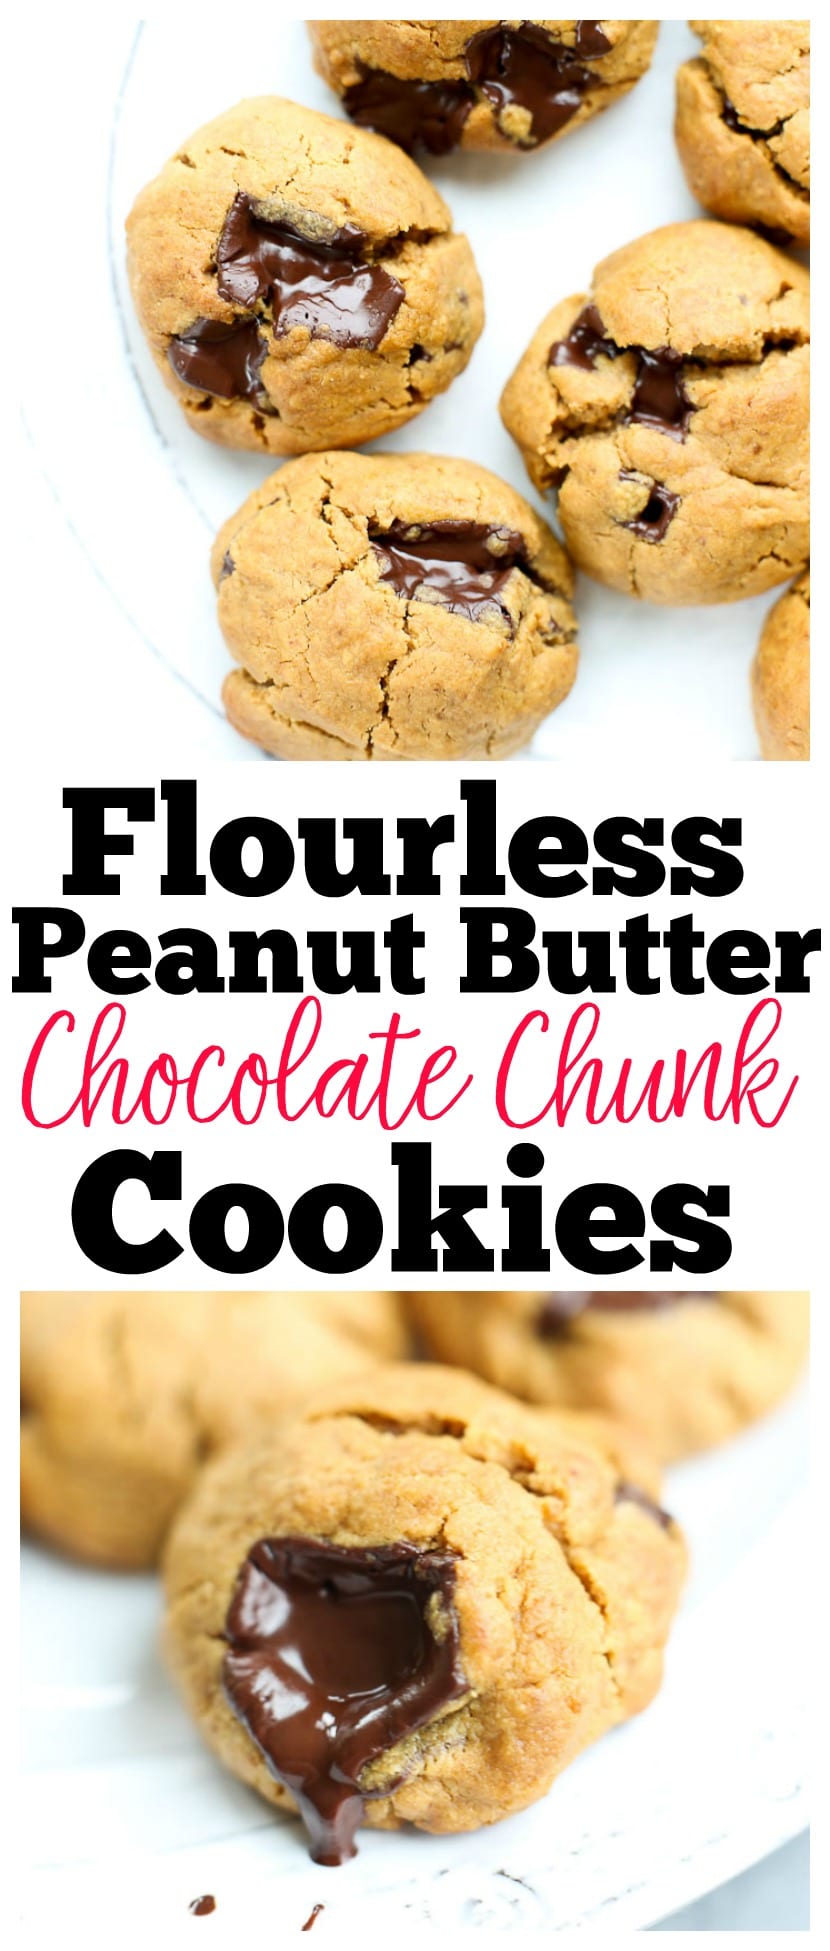 Flourless Peanut Butter Chocolate Chip Cookies Recipe | healthy cookies | gluten-free cookies |flourless cookies | dairy free | 